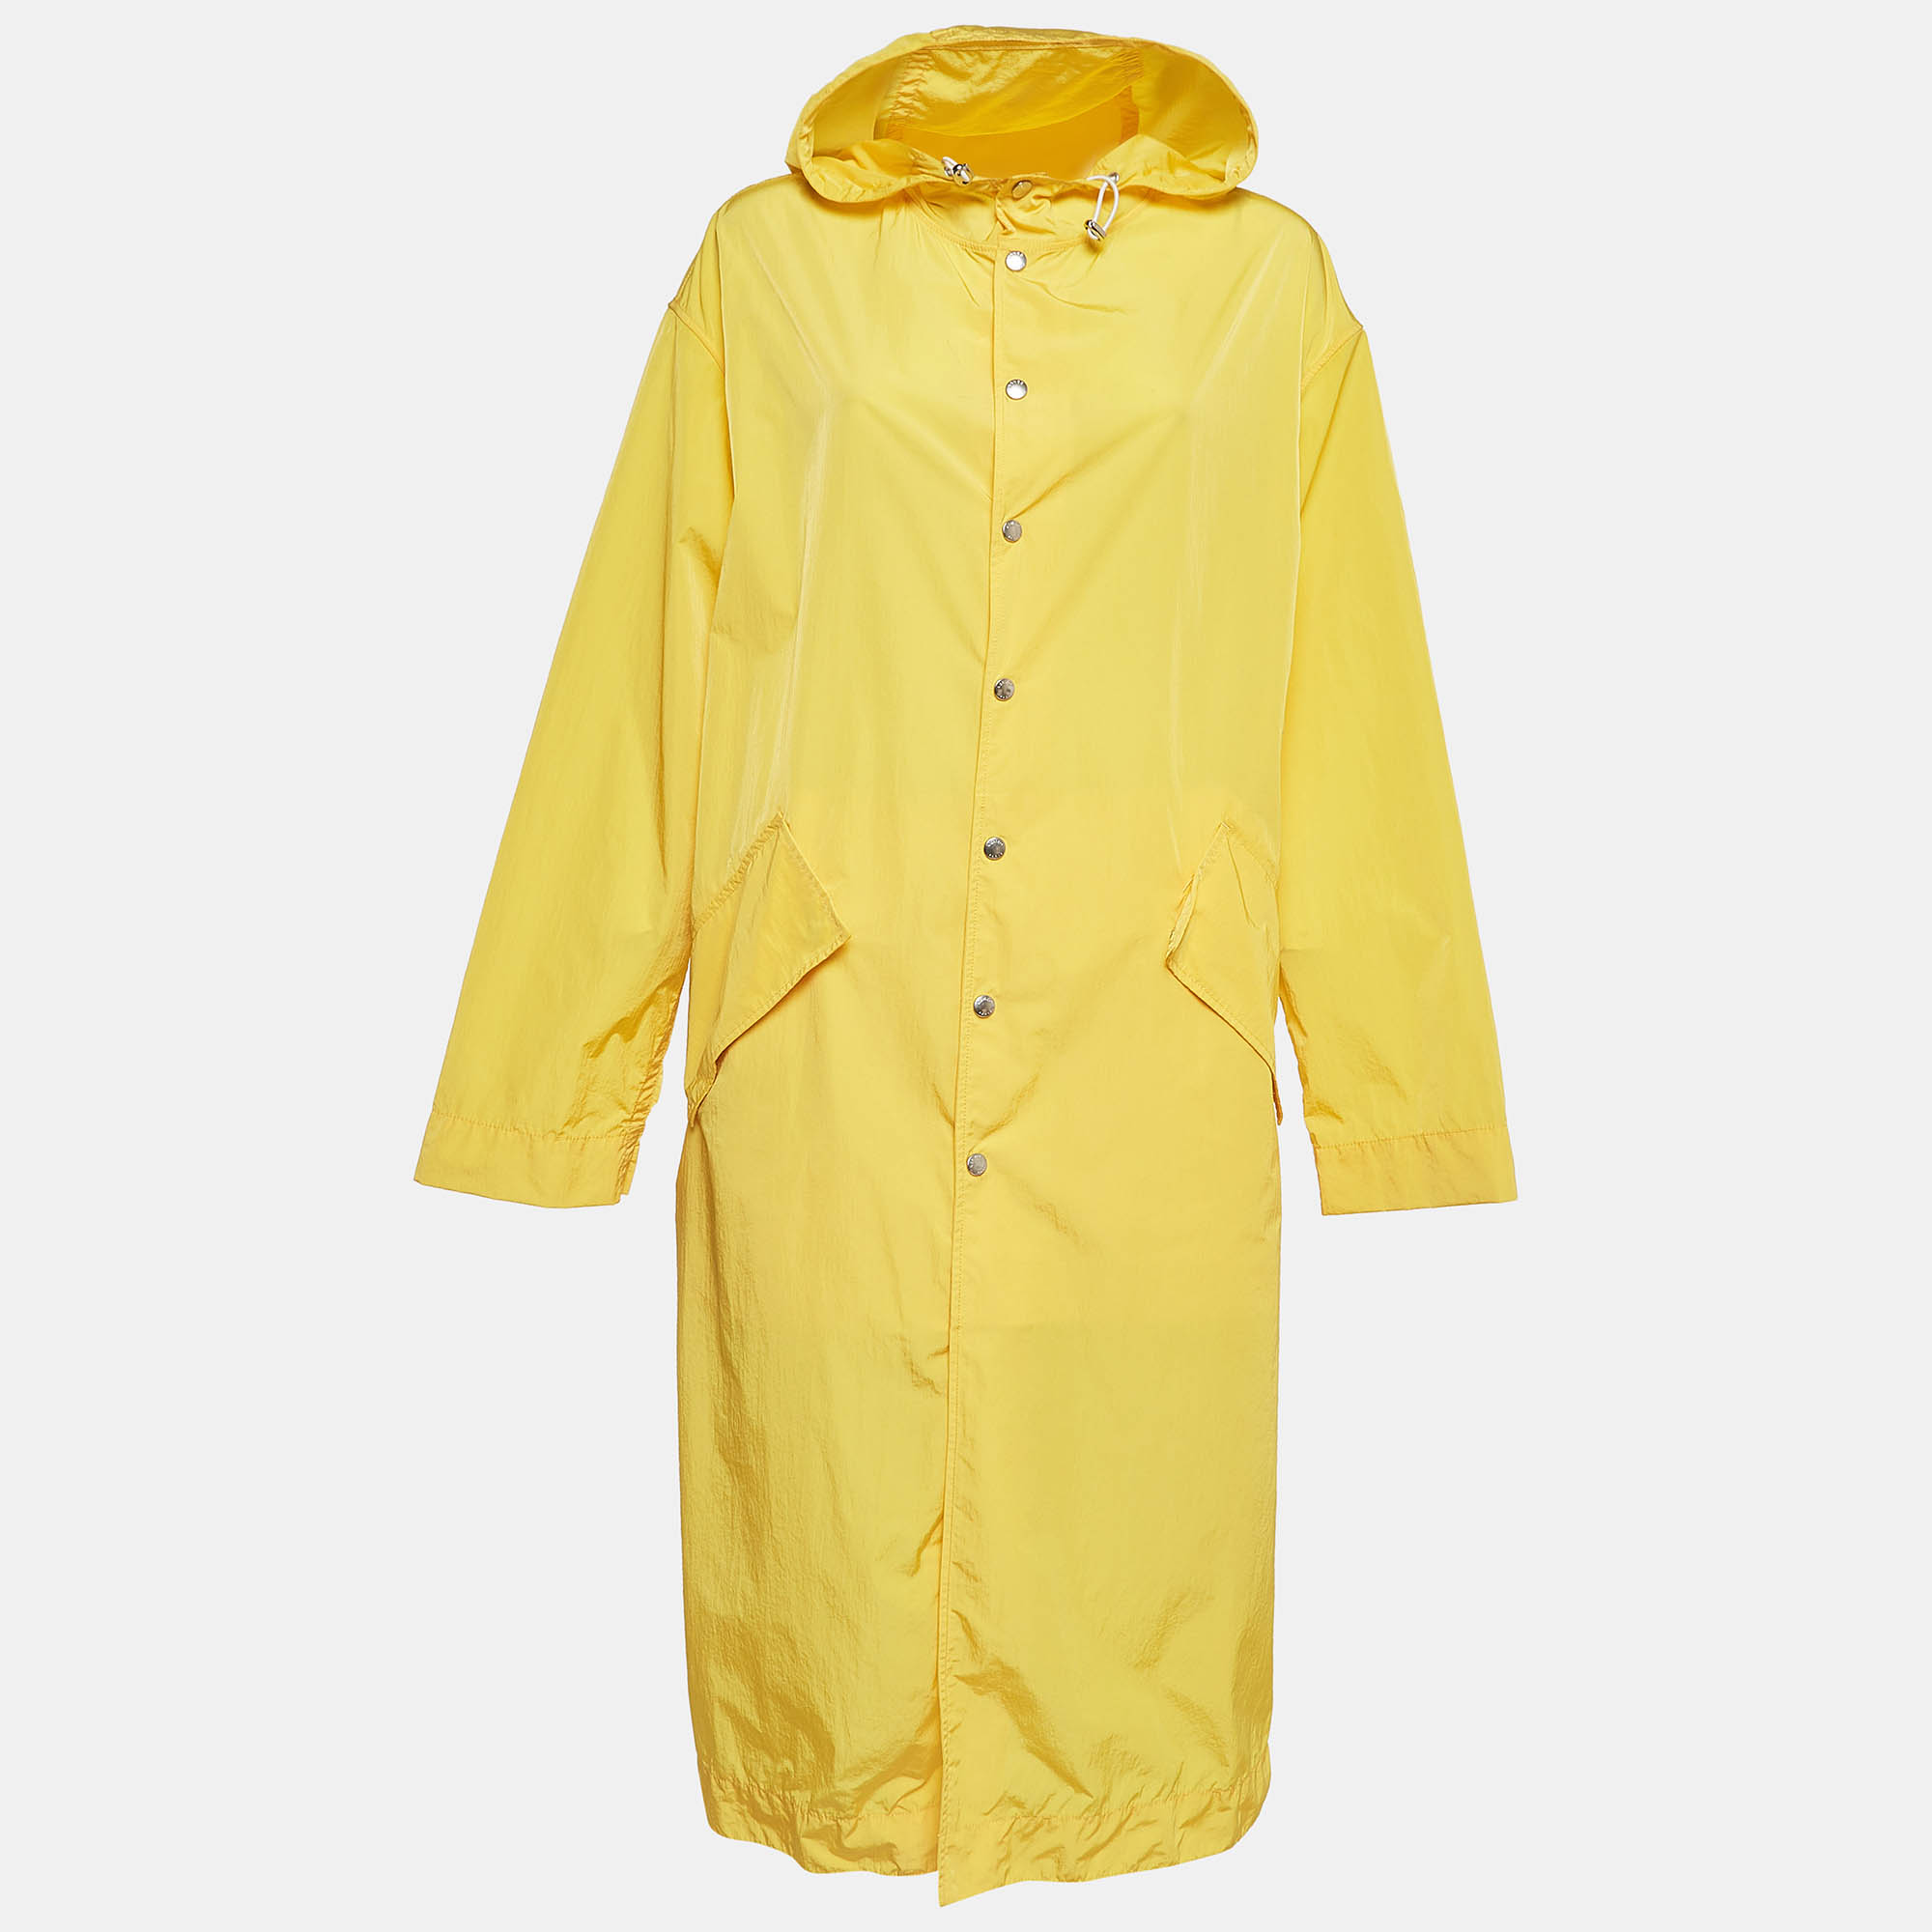 Kenzo yellow embroidered nylon rain coat s